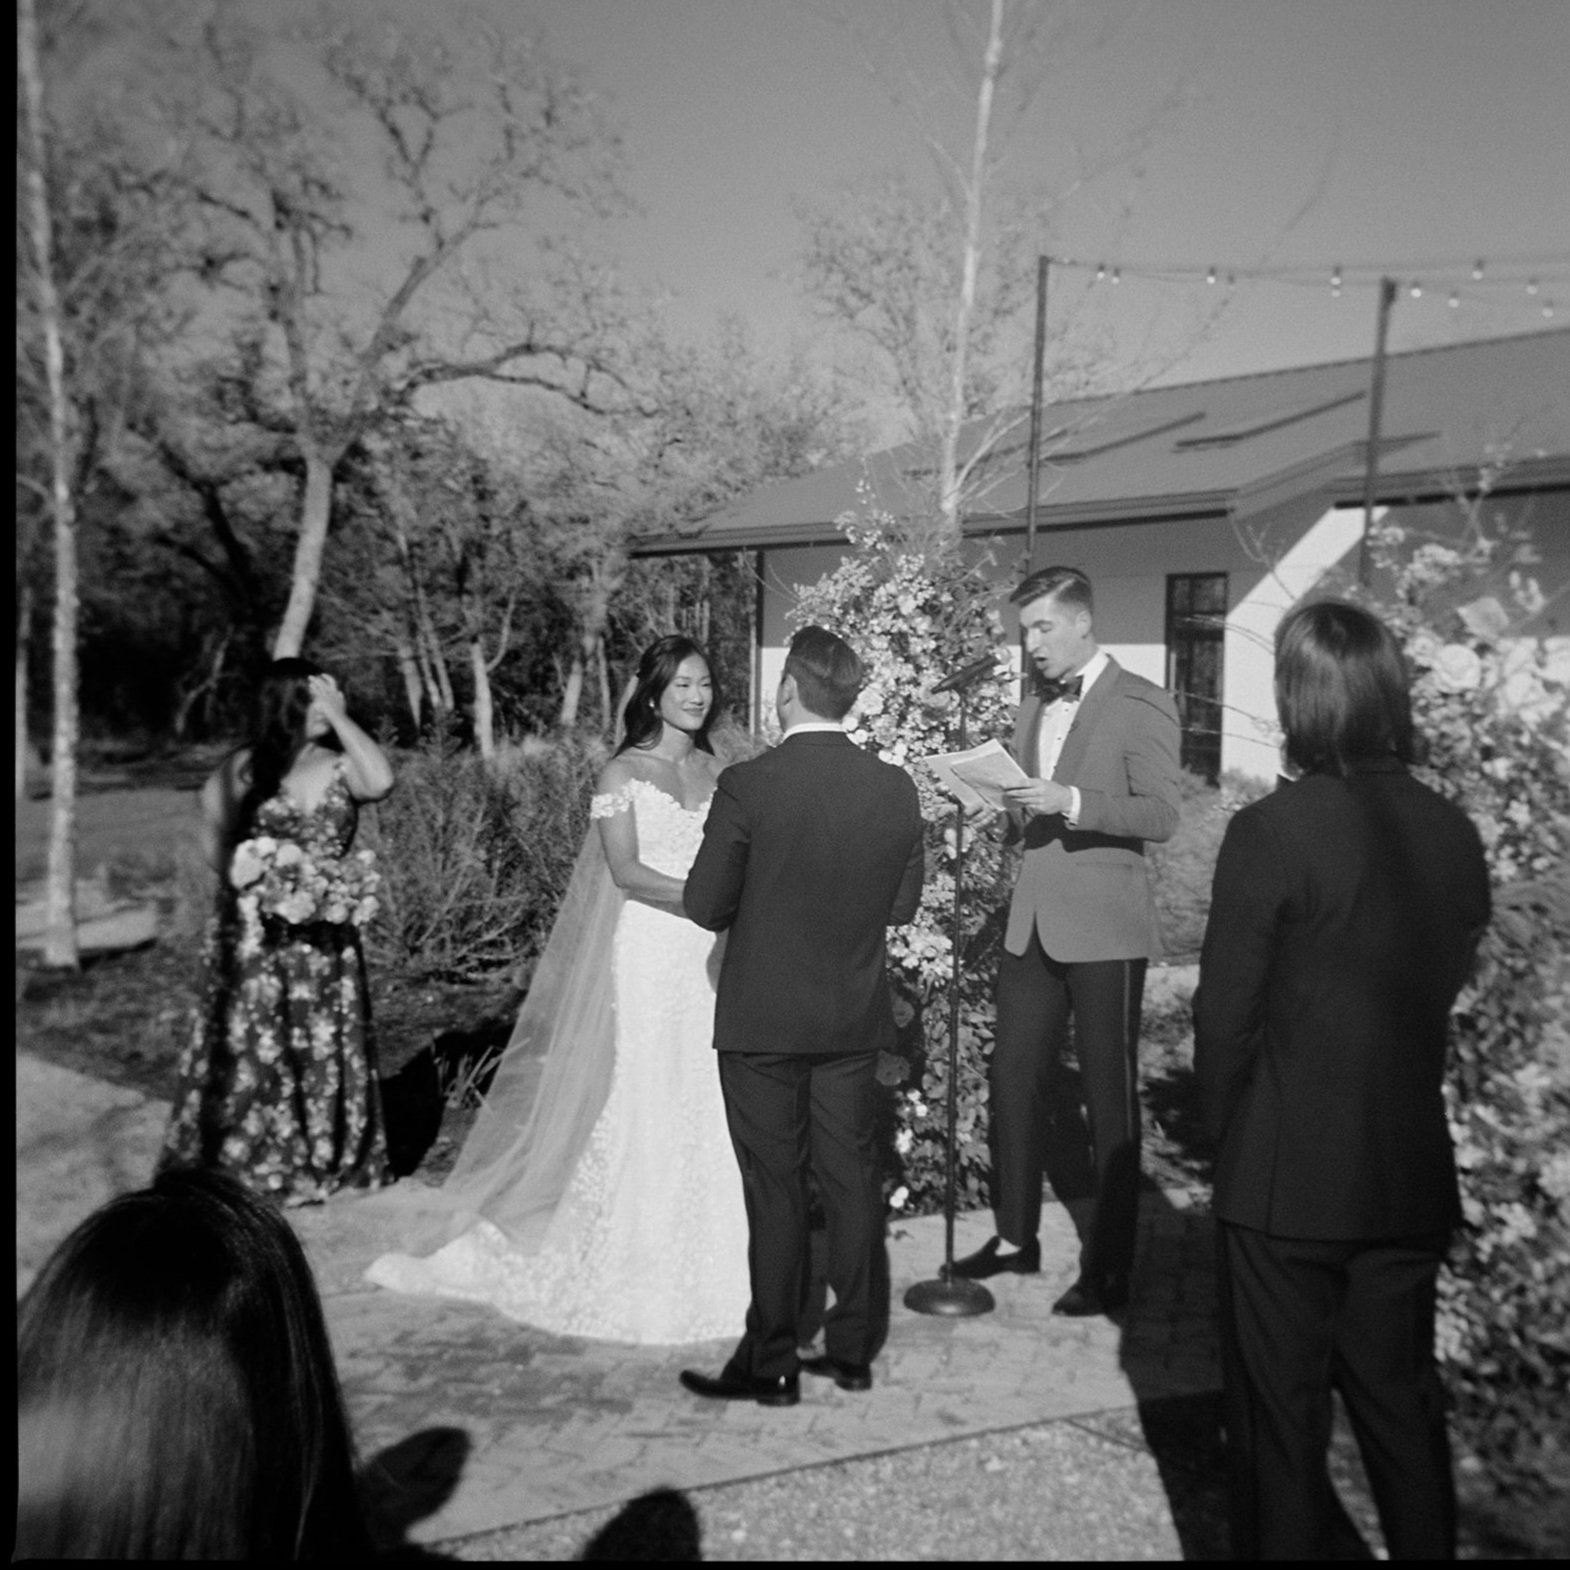 Best-Austin-Wedding-Photographers-Elopement-Film-35mm-Asheville-Santa-Barbara-Grand-Lady-109.jpg